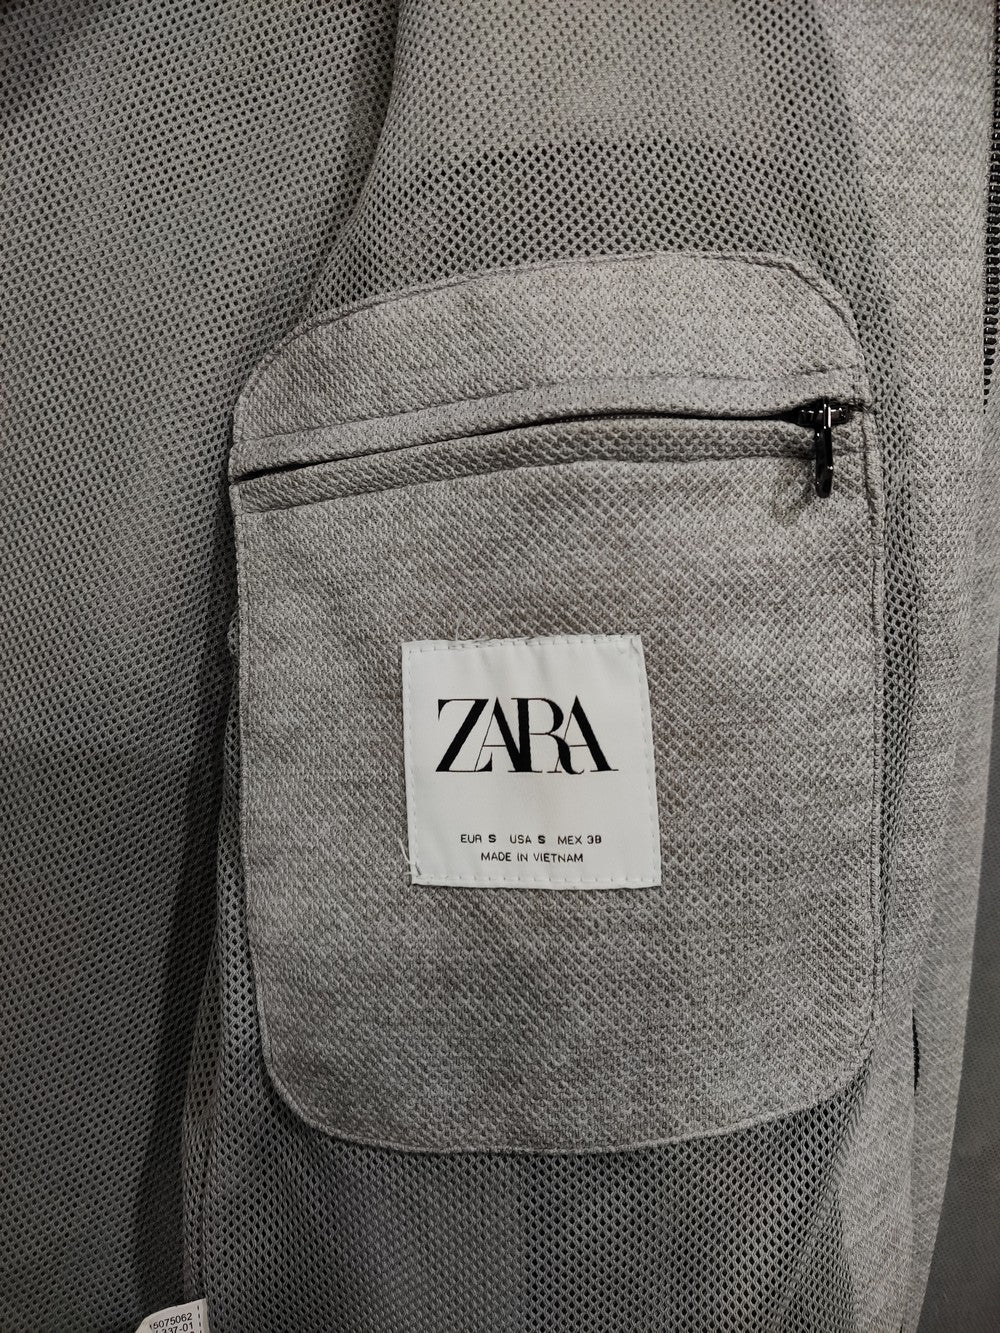 Zara Man Branded Original Polyester Jacket For Men